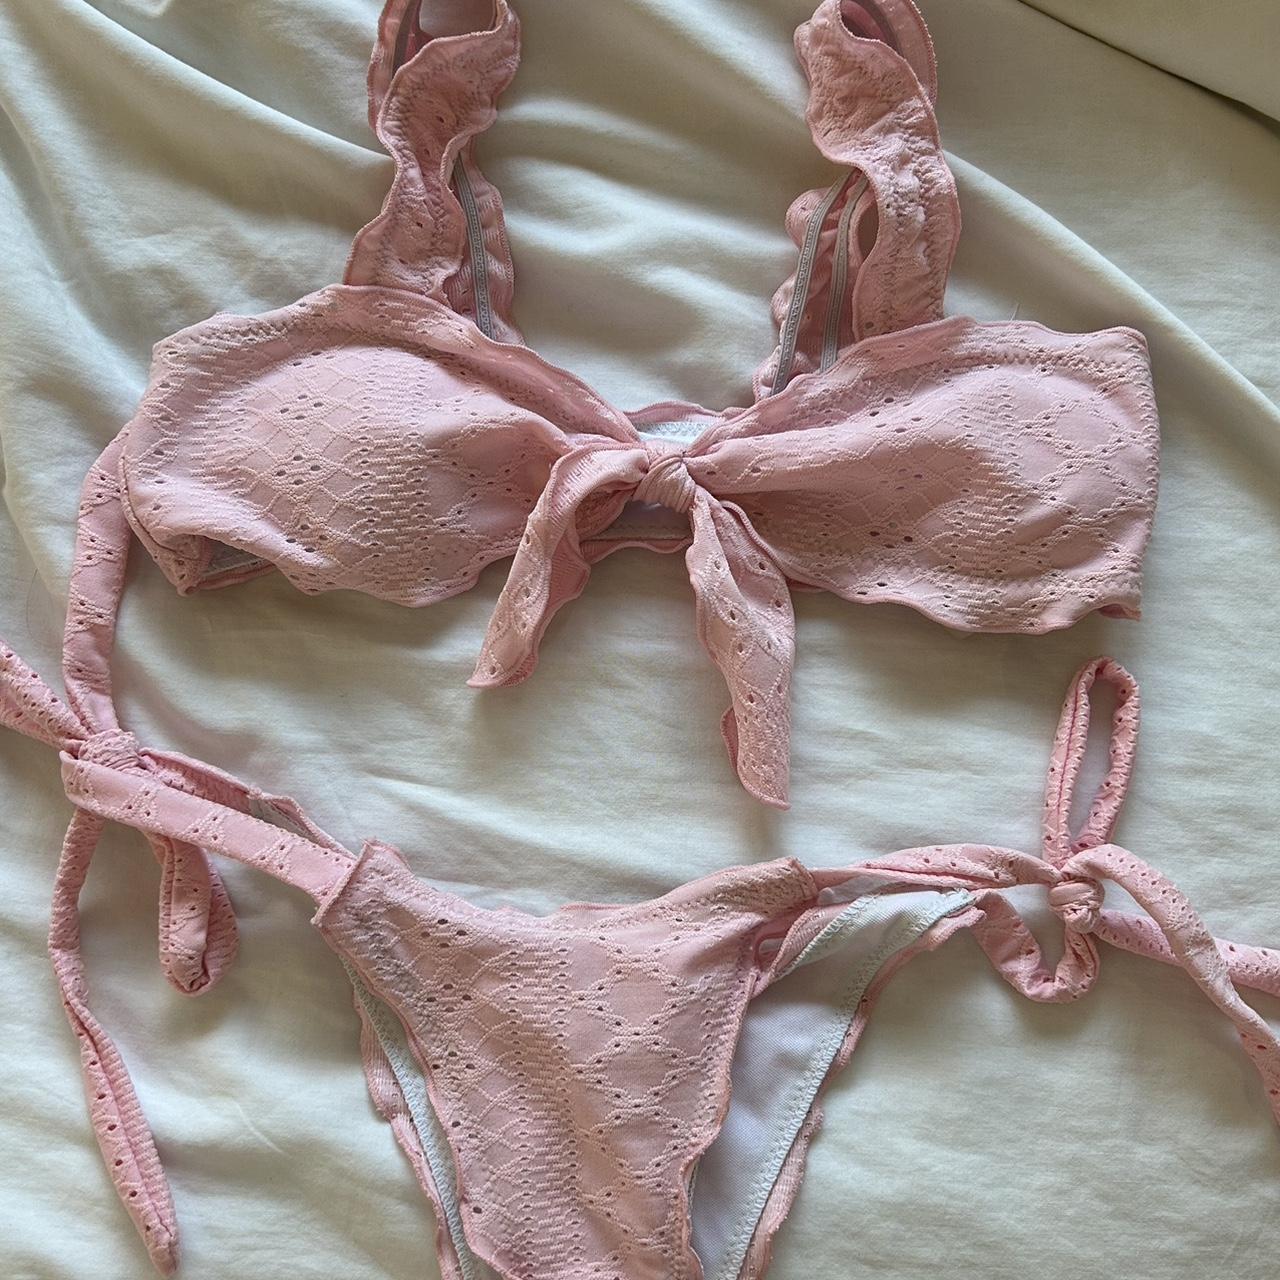 Mega hot Pink holographic bra bikini top Pair with - Depop